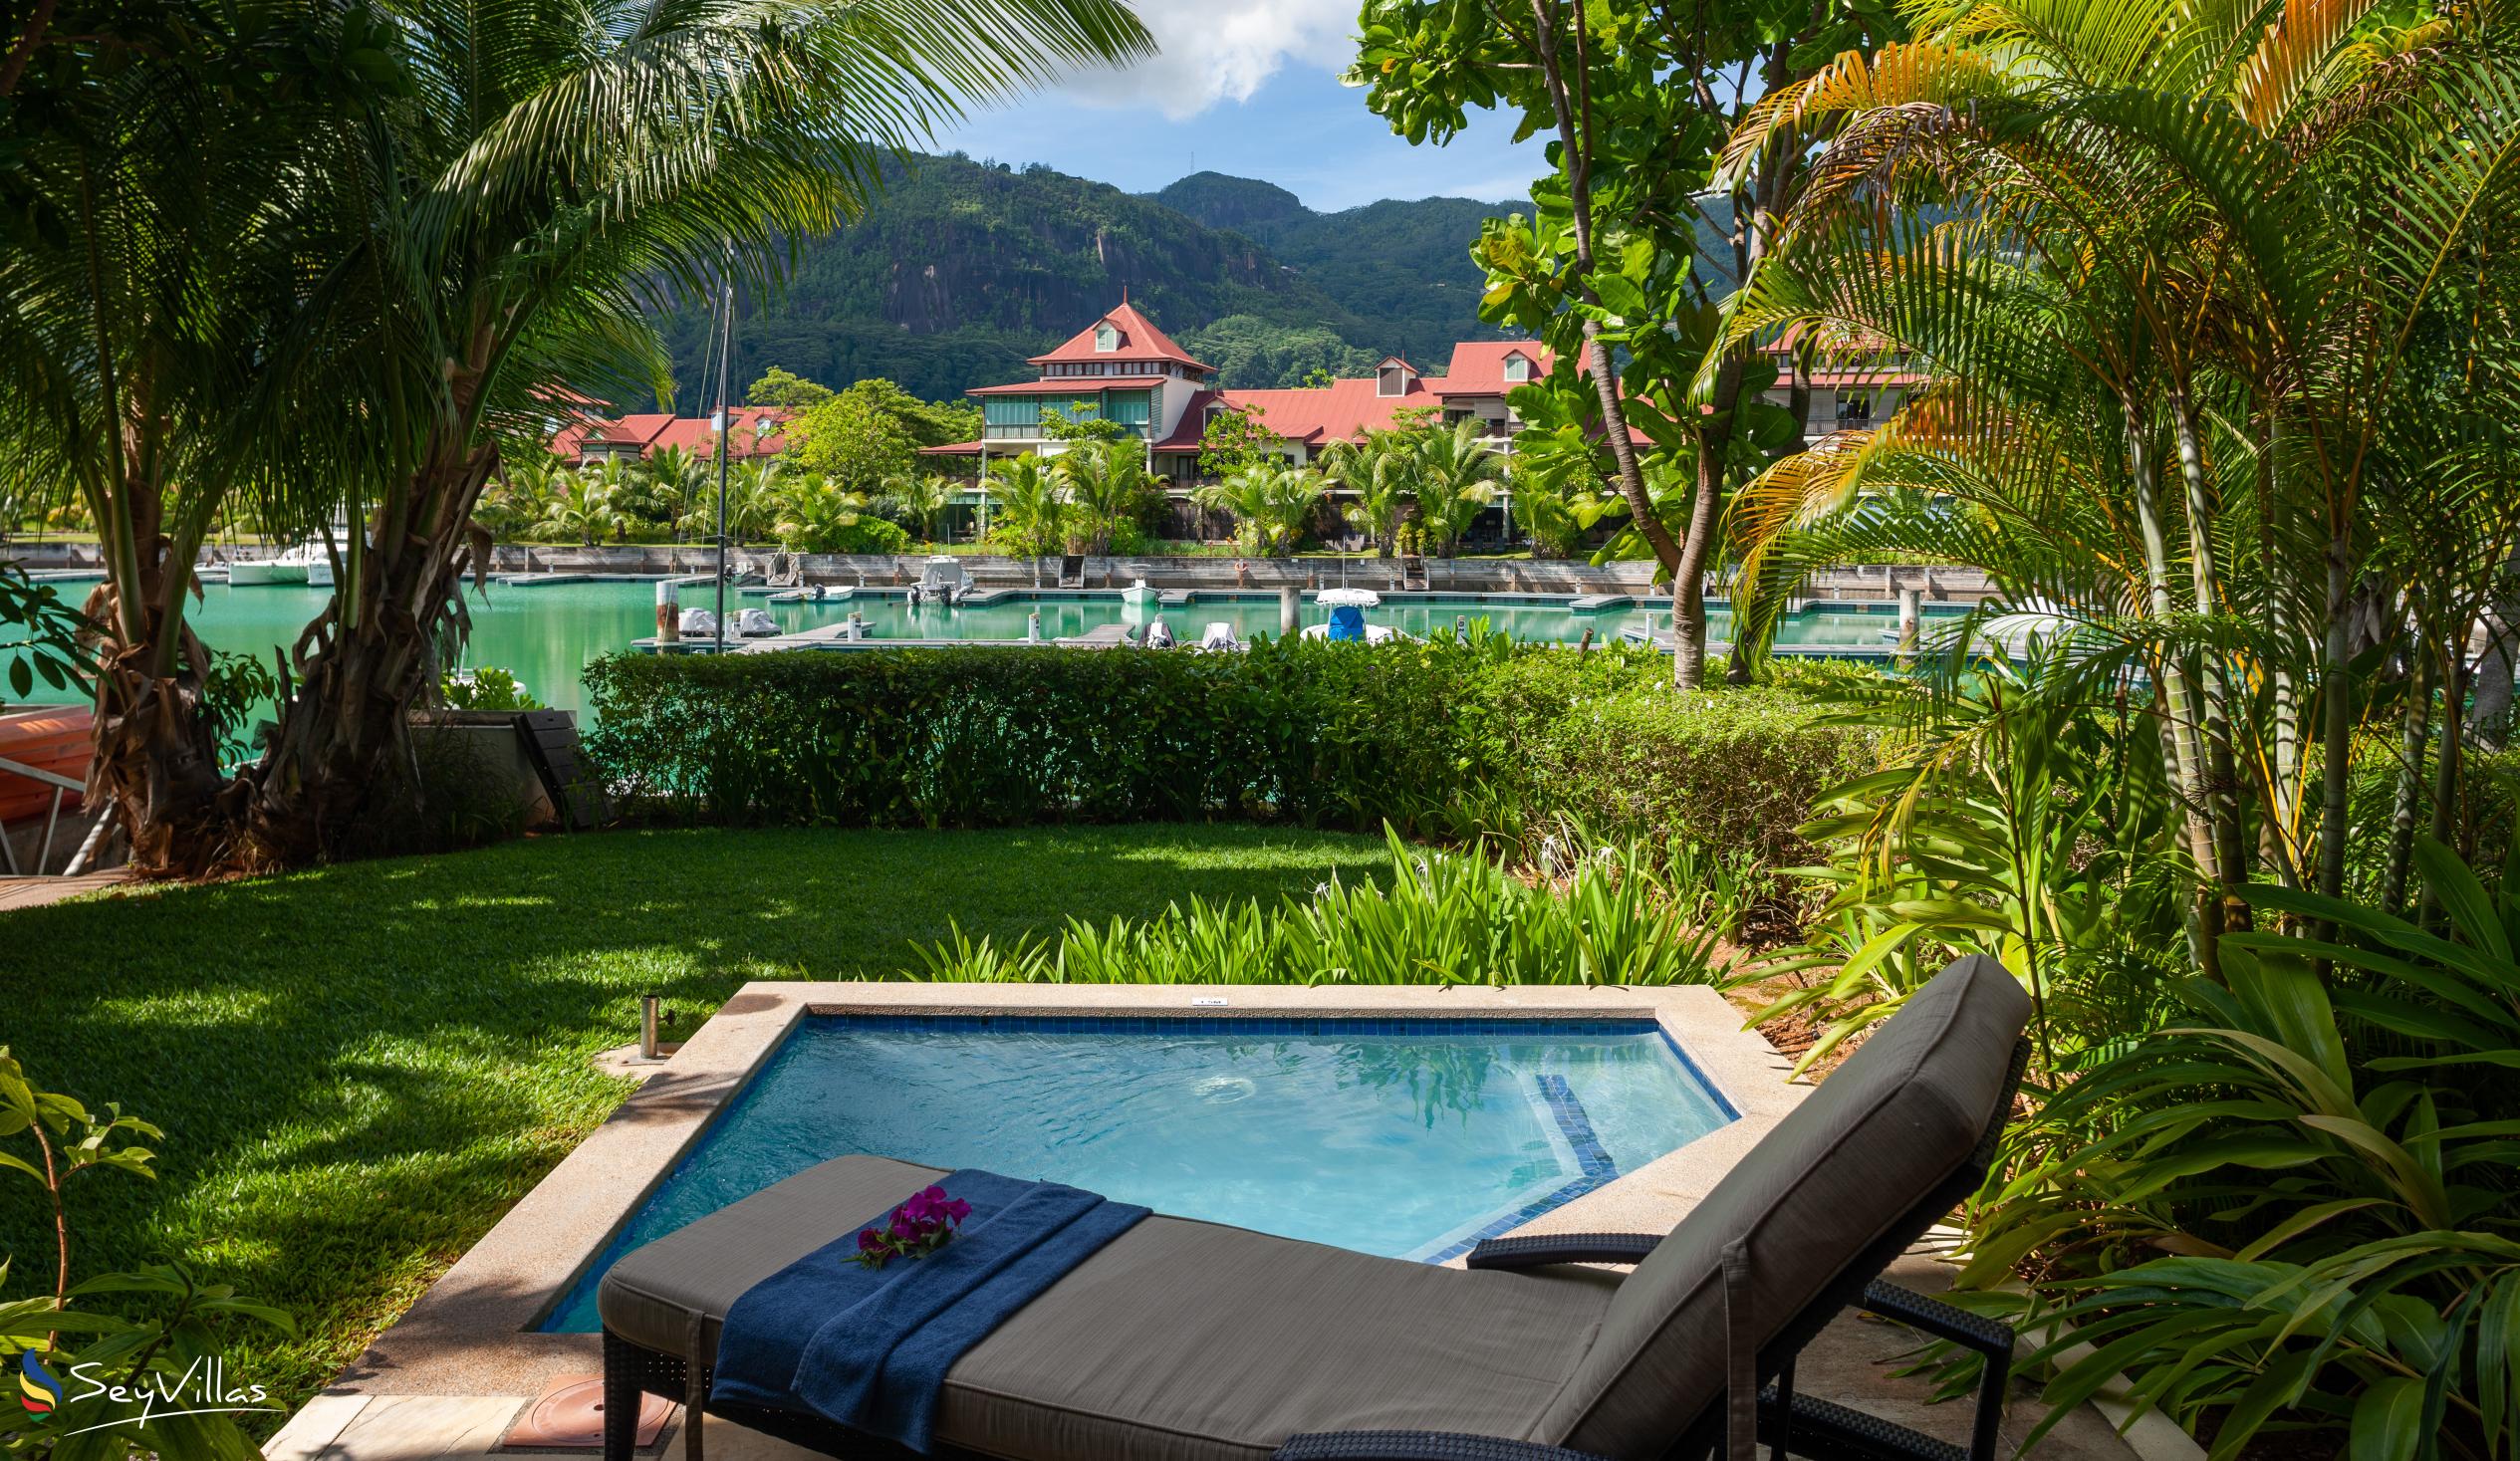 Photo 1: Eden Confort - Outdoor area - Mahé (Seychelles)